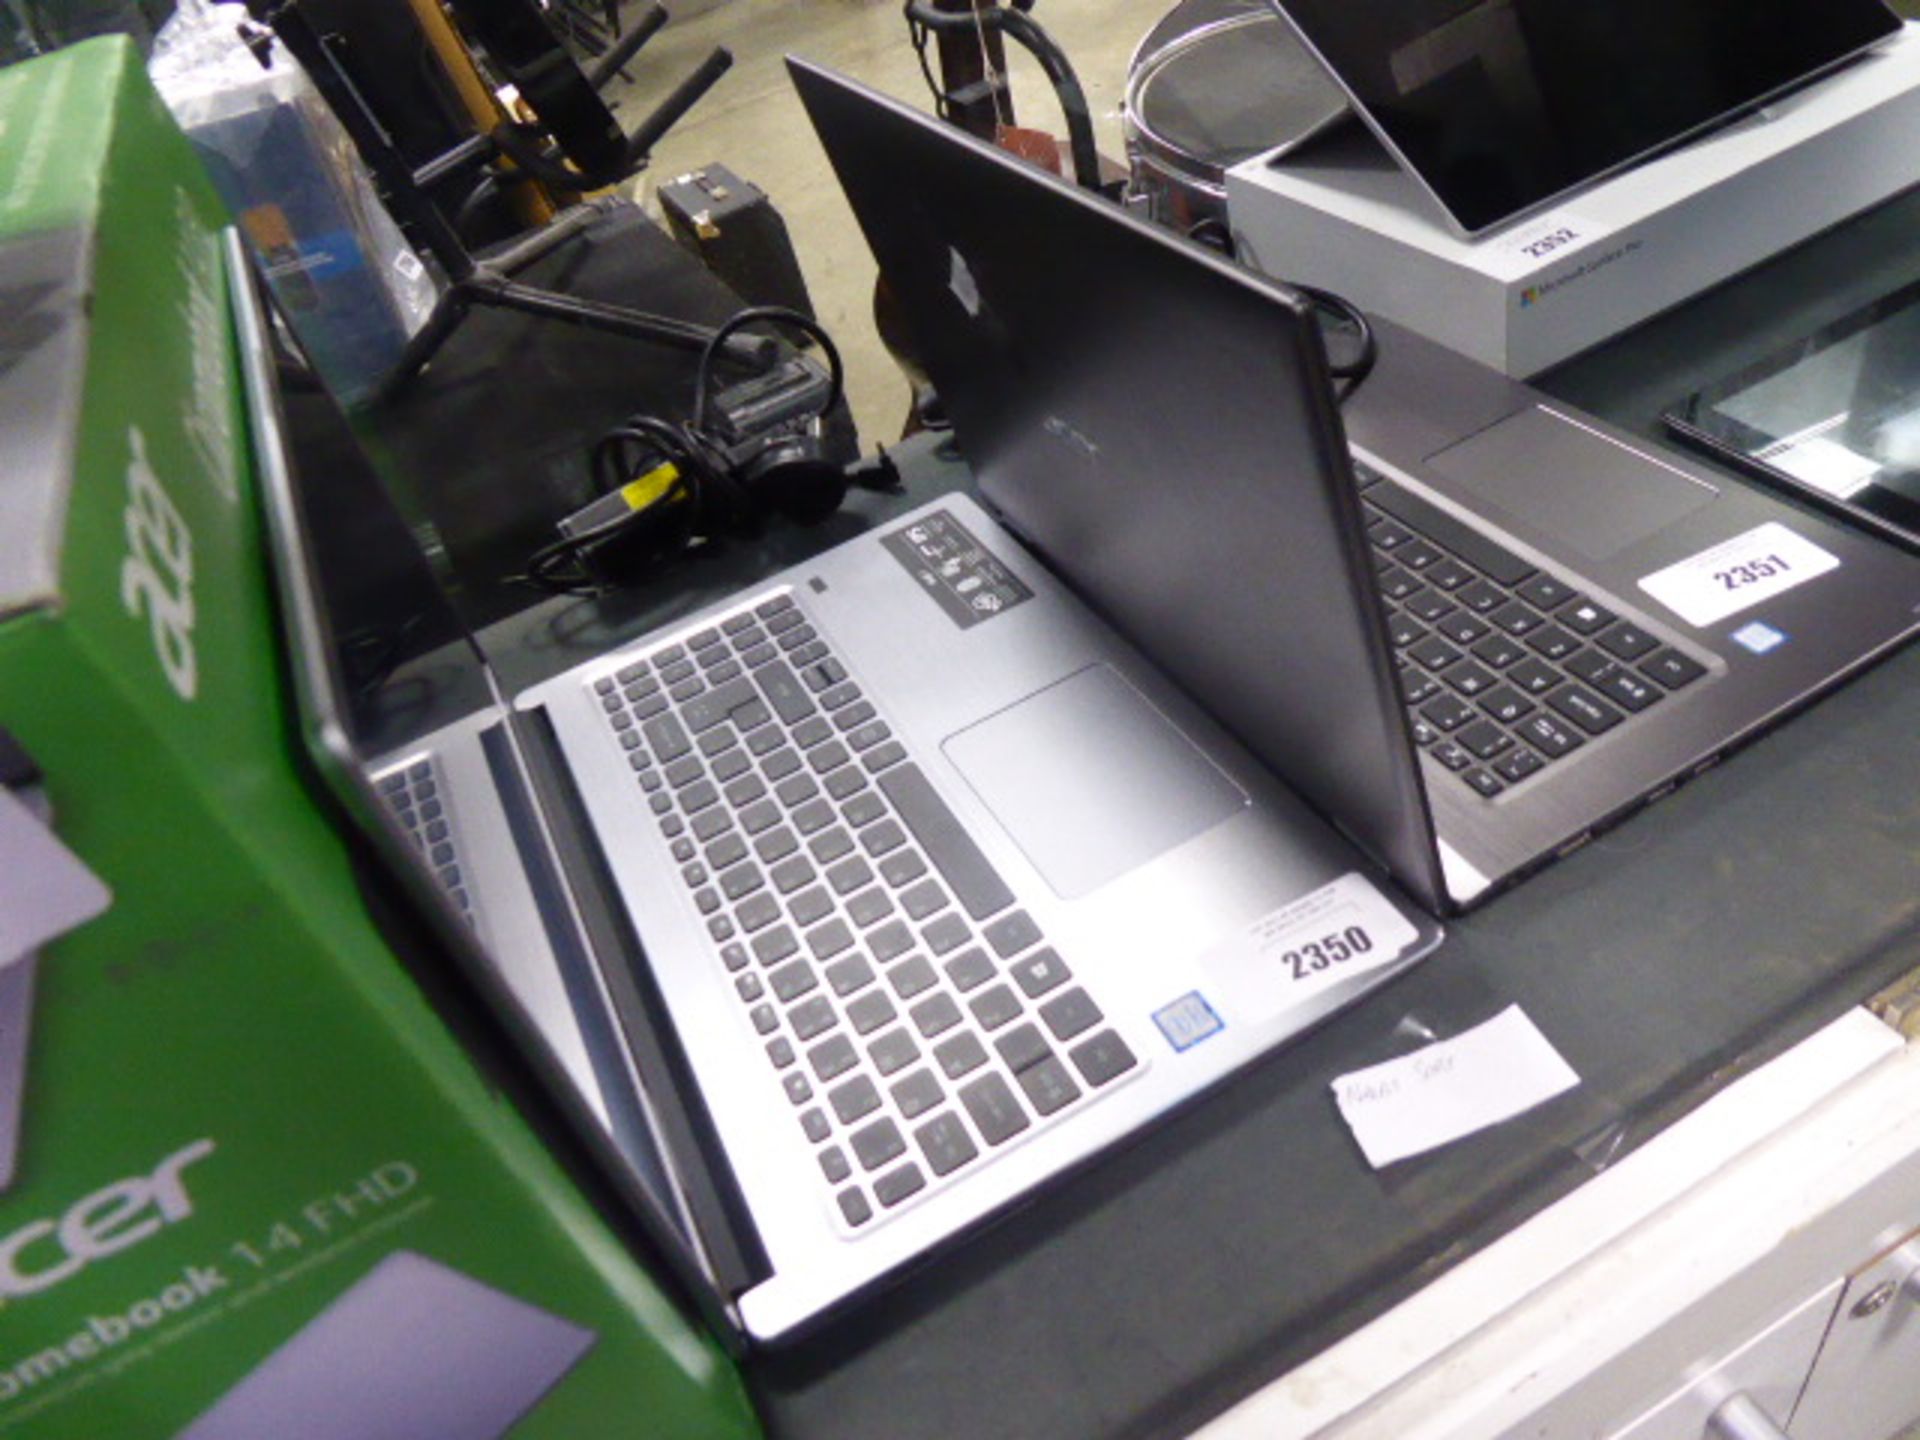 Acer Swift 3 laptop core i5 8th gen processor, 4gb ram, 1tb hdd, with psu